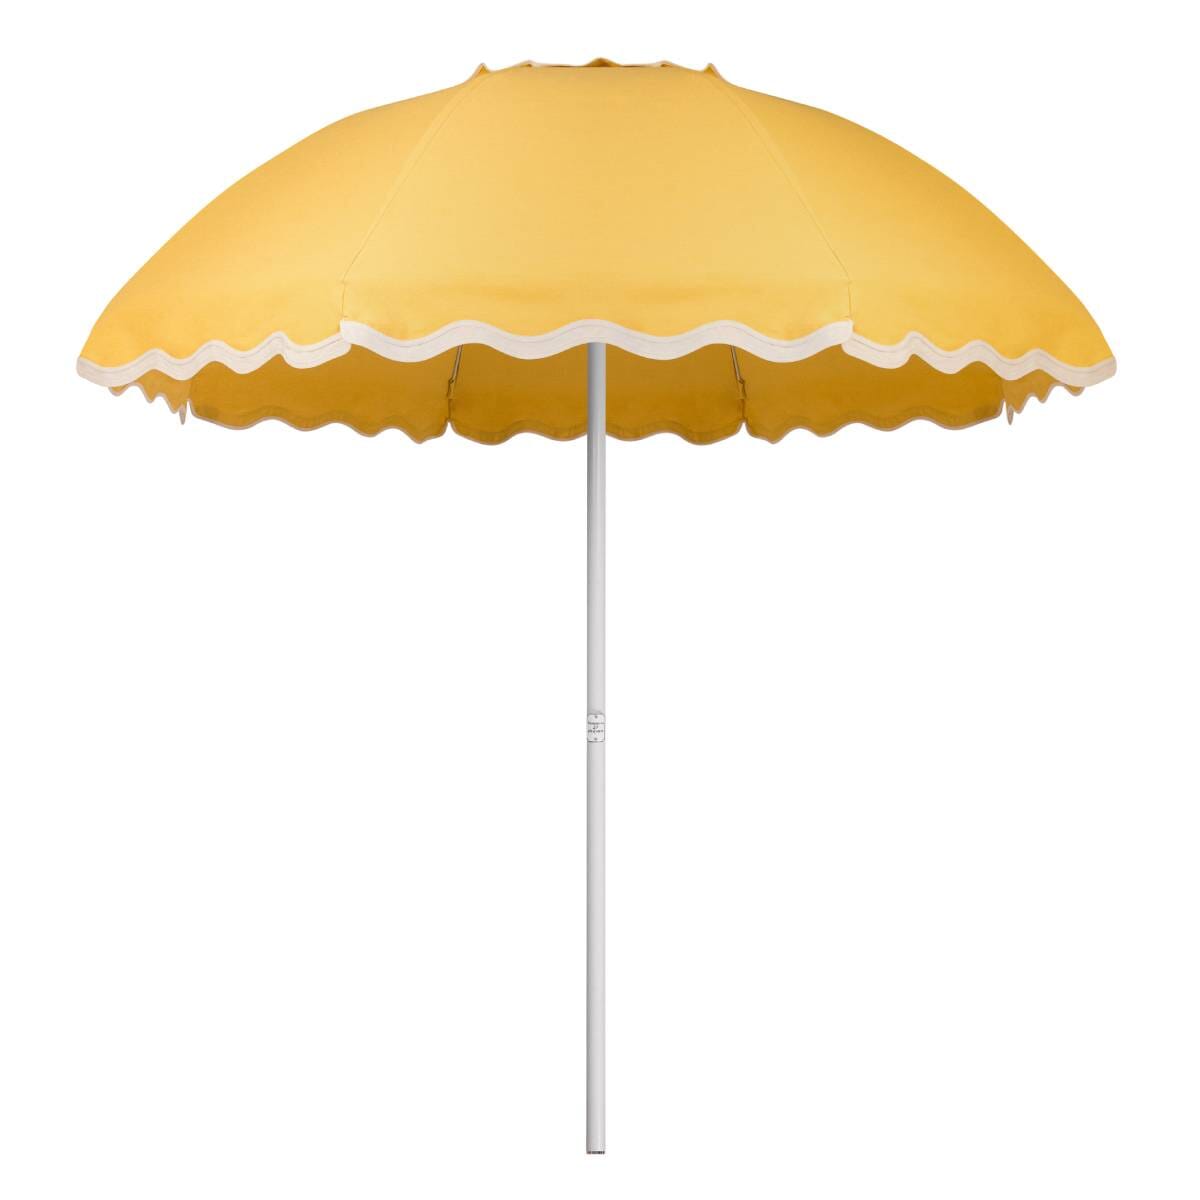 Studio image of rivie mimosa patio umbrella